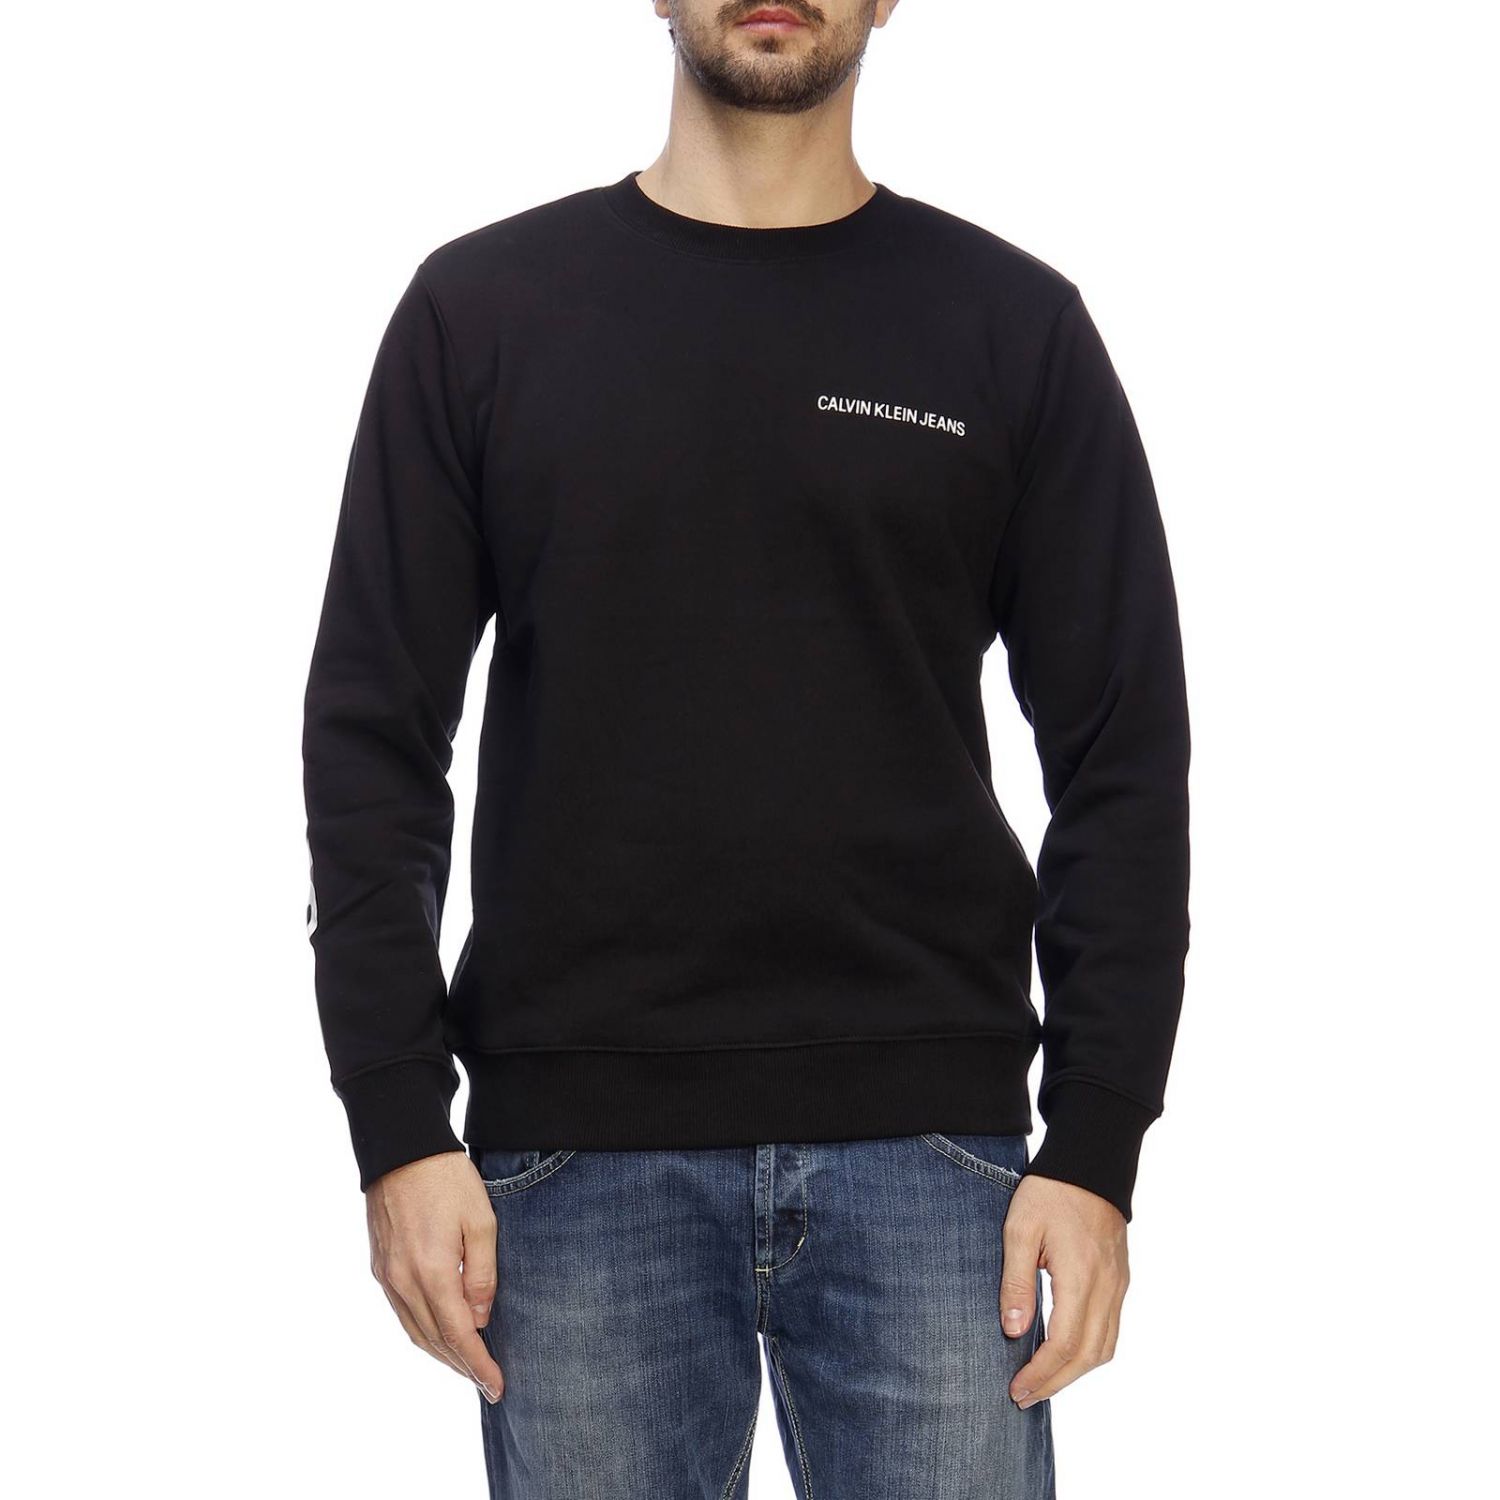 Calvin Klein Jeans Outlet: sweater for man - Black | Calvin Klein Jeans ...